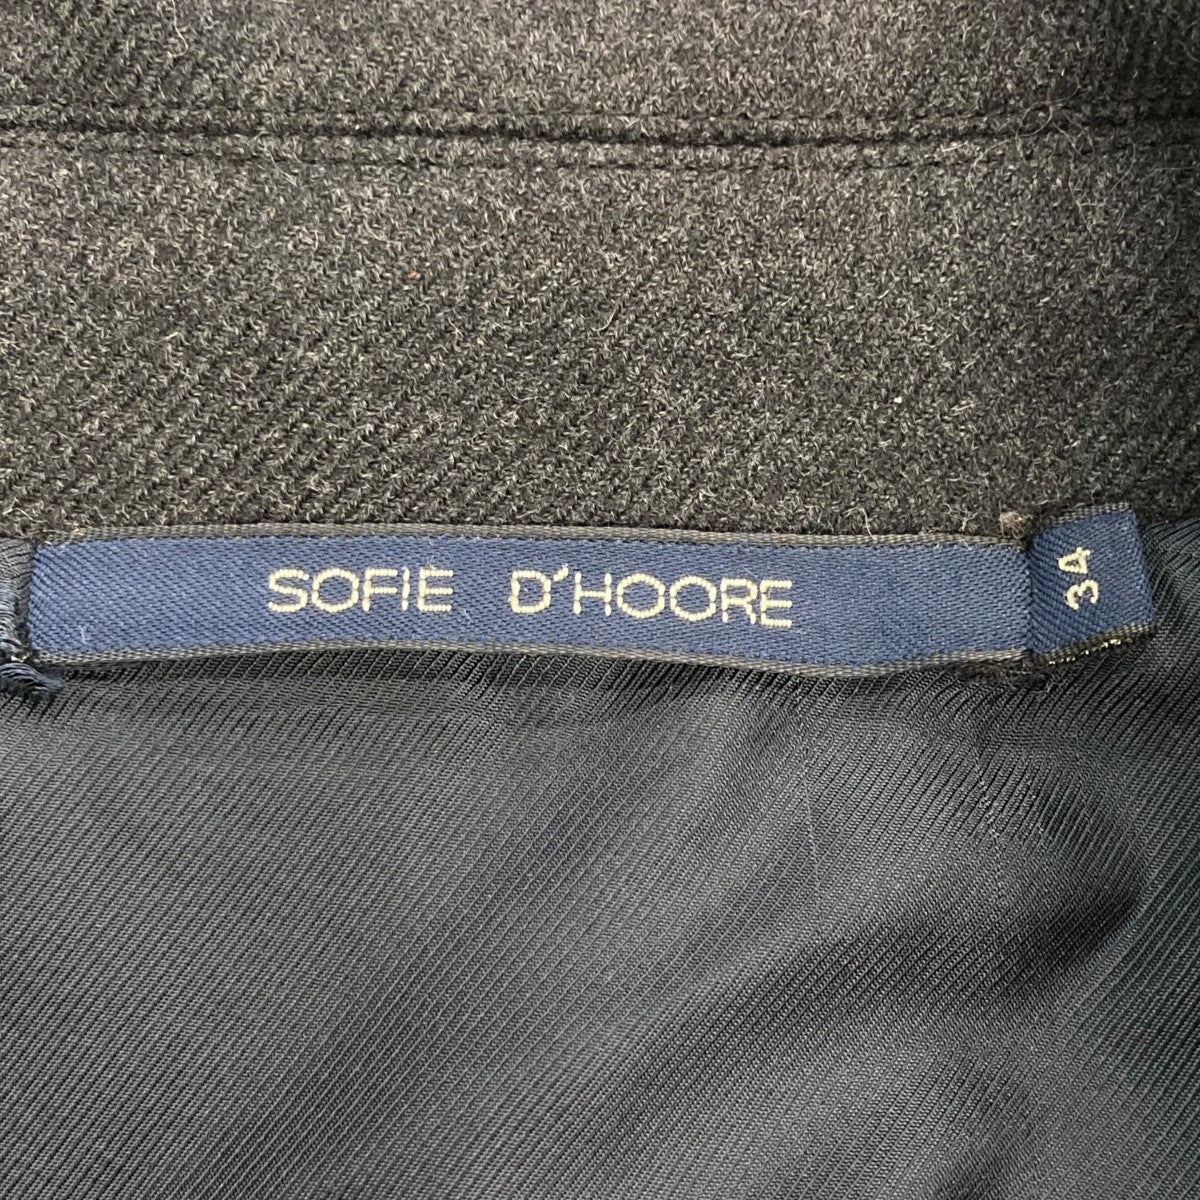 SOFIE D’HOORE(ソフィードール) ダブルステンカラーコート